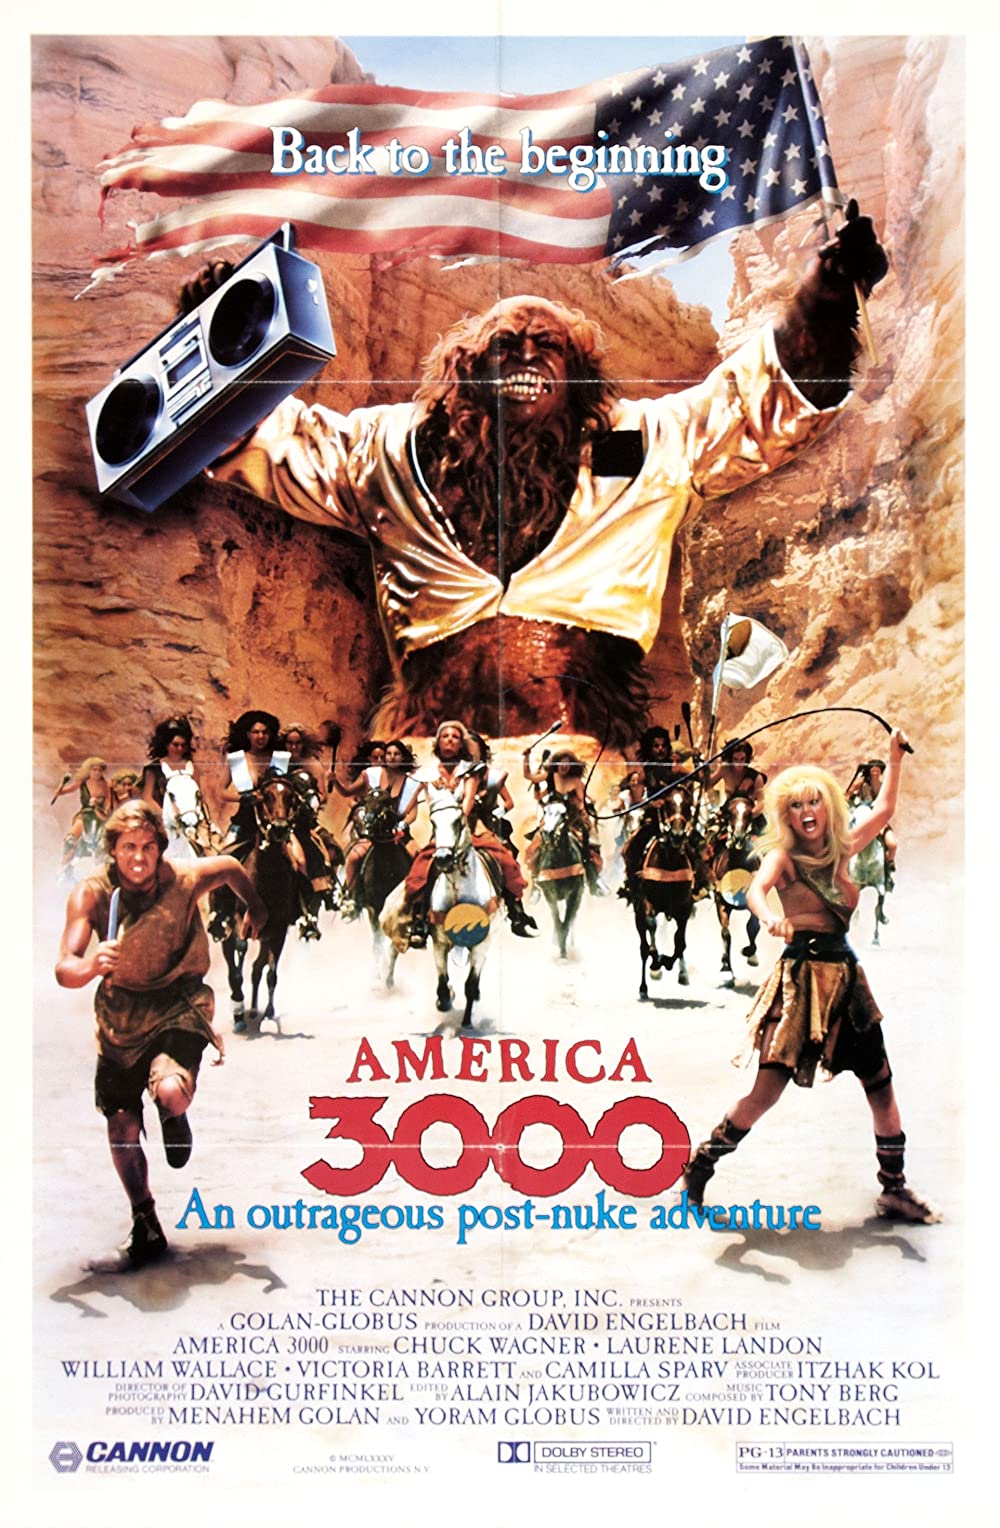 Filmbeschreibung zu America 3000